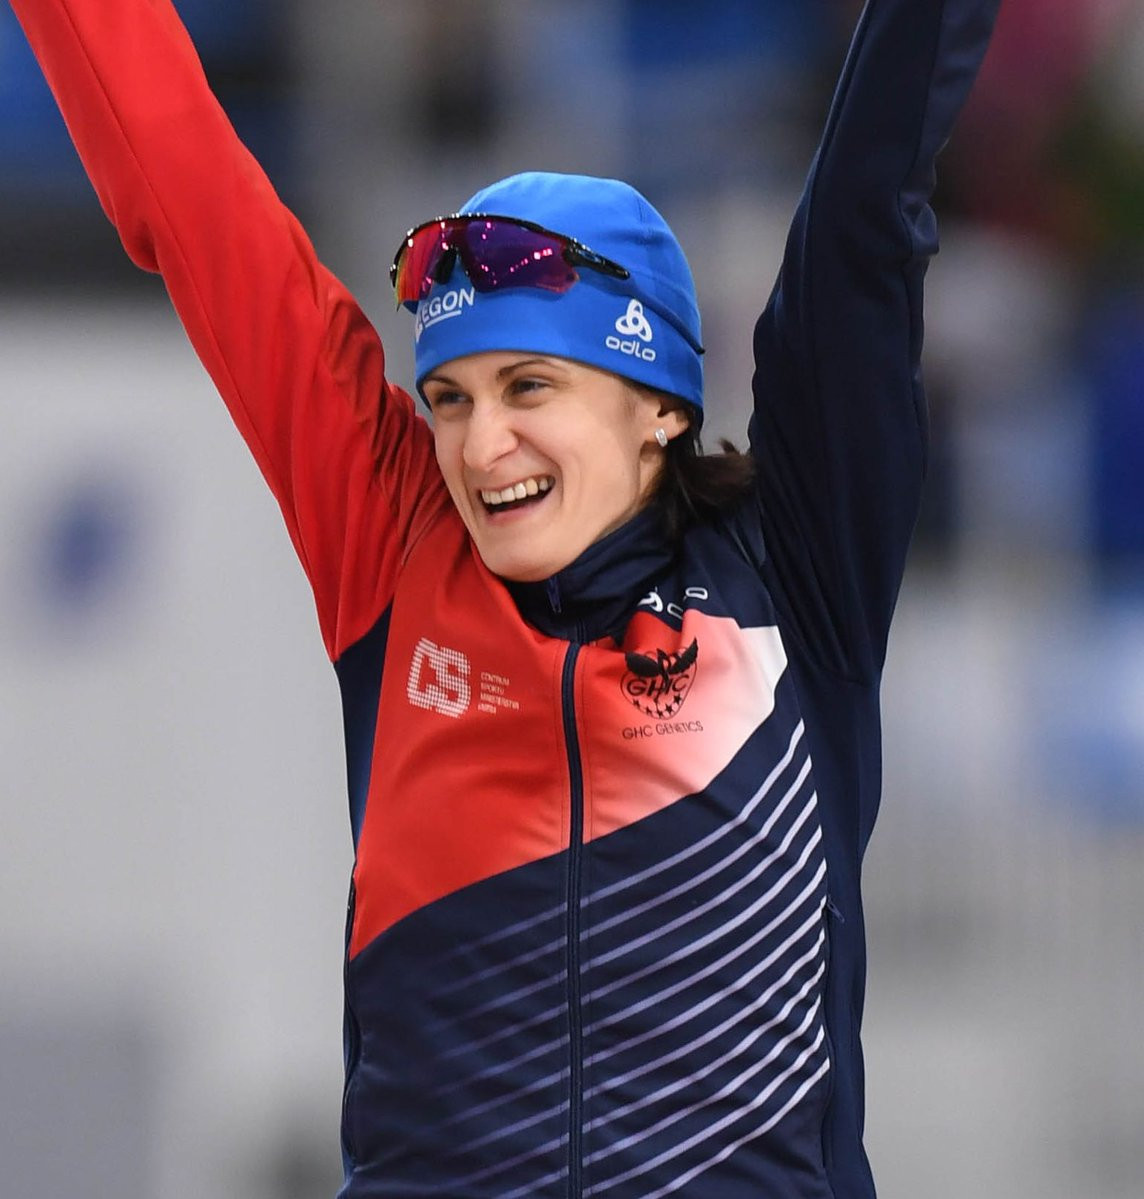 The Czech Republic's Martina Sáblíková won the women's 3,000m at the ISU Speed Skating World Cup in Hamar ©Czech Olympic Team